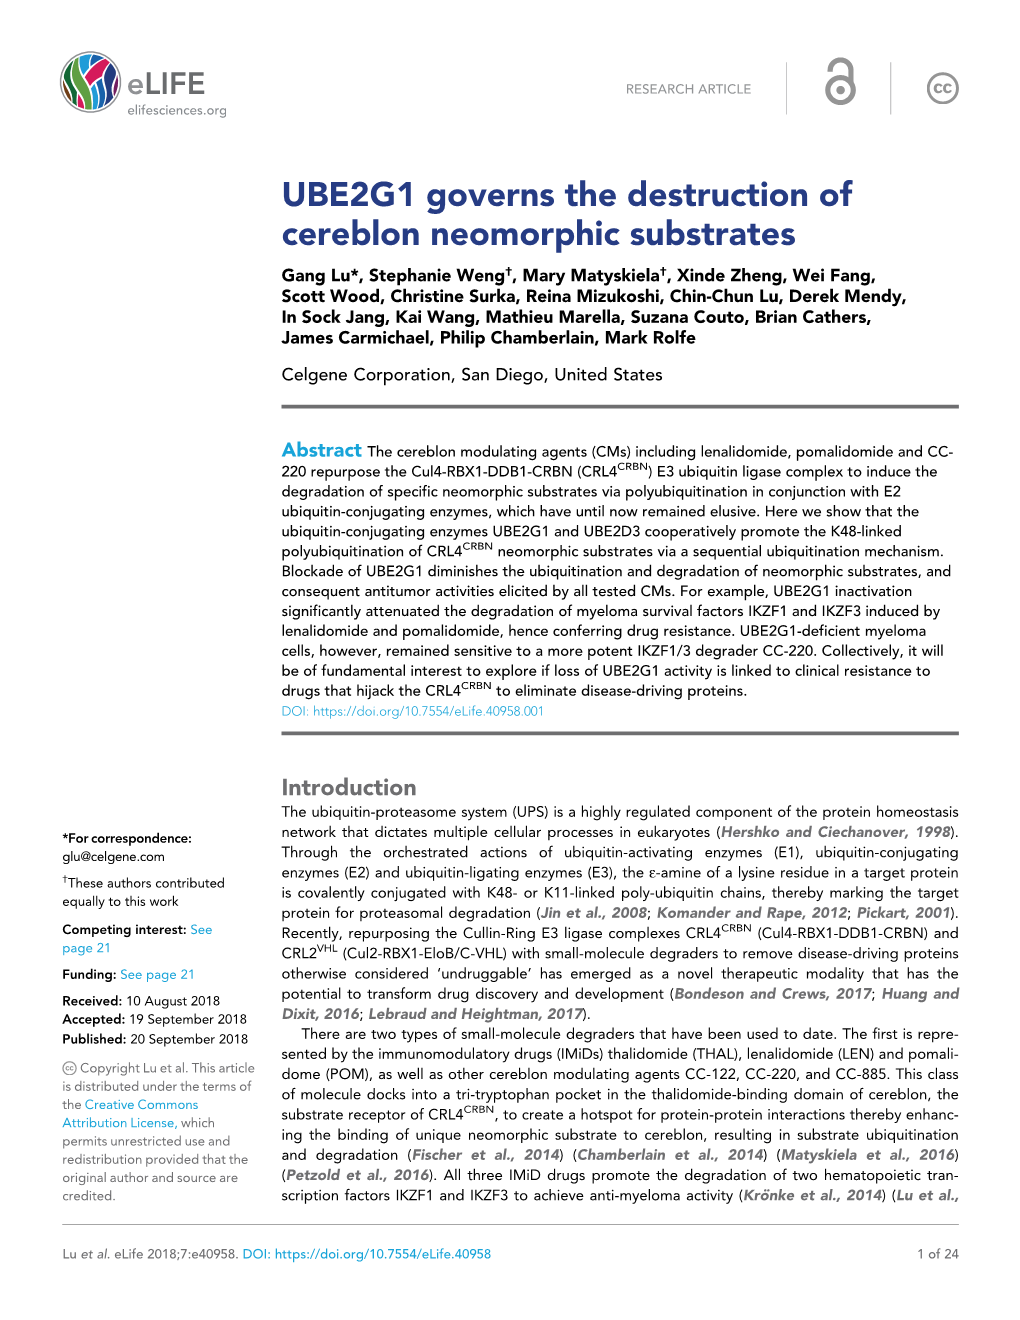 UBE2G1 Governs the Destruction of Cereblon Neomorphic Substrates